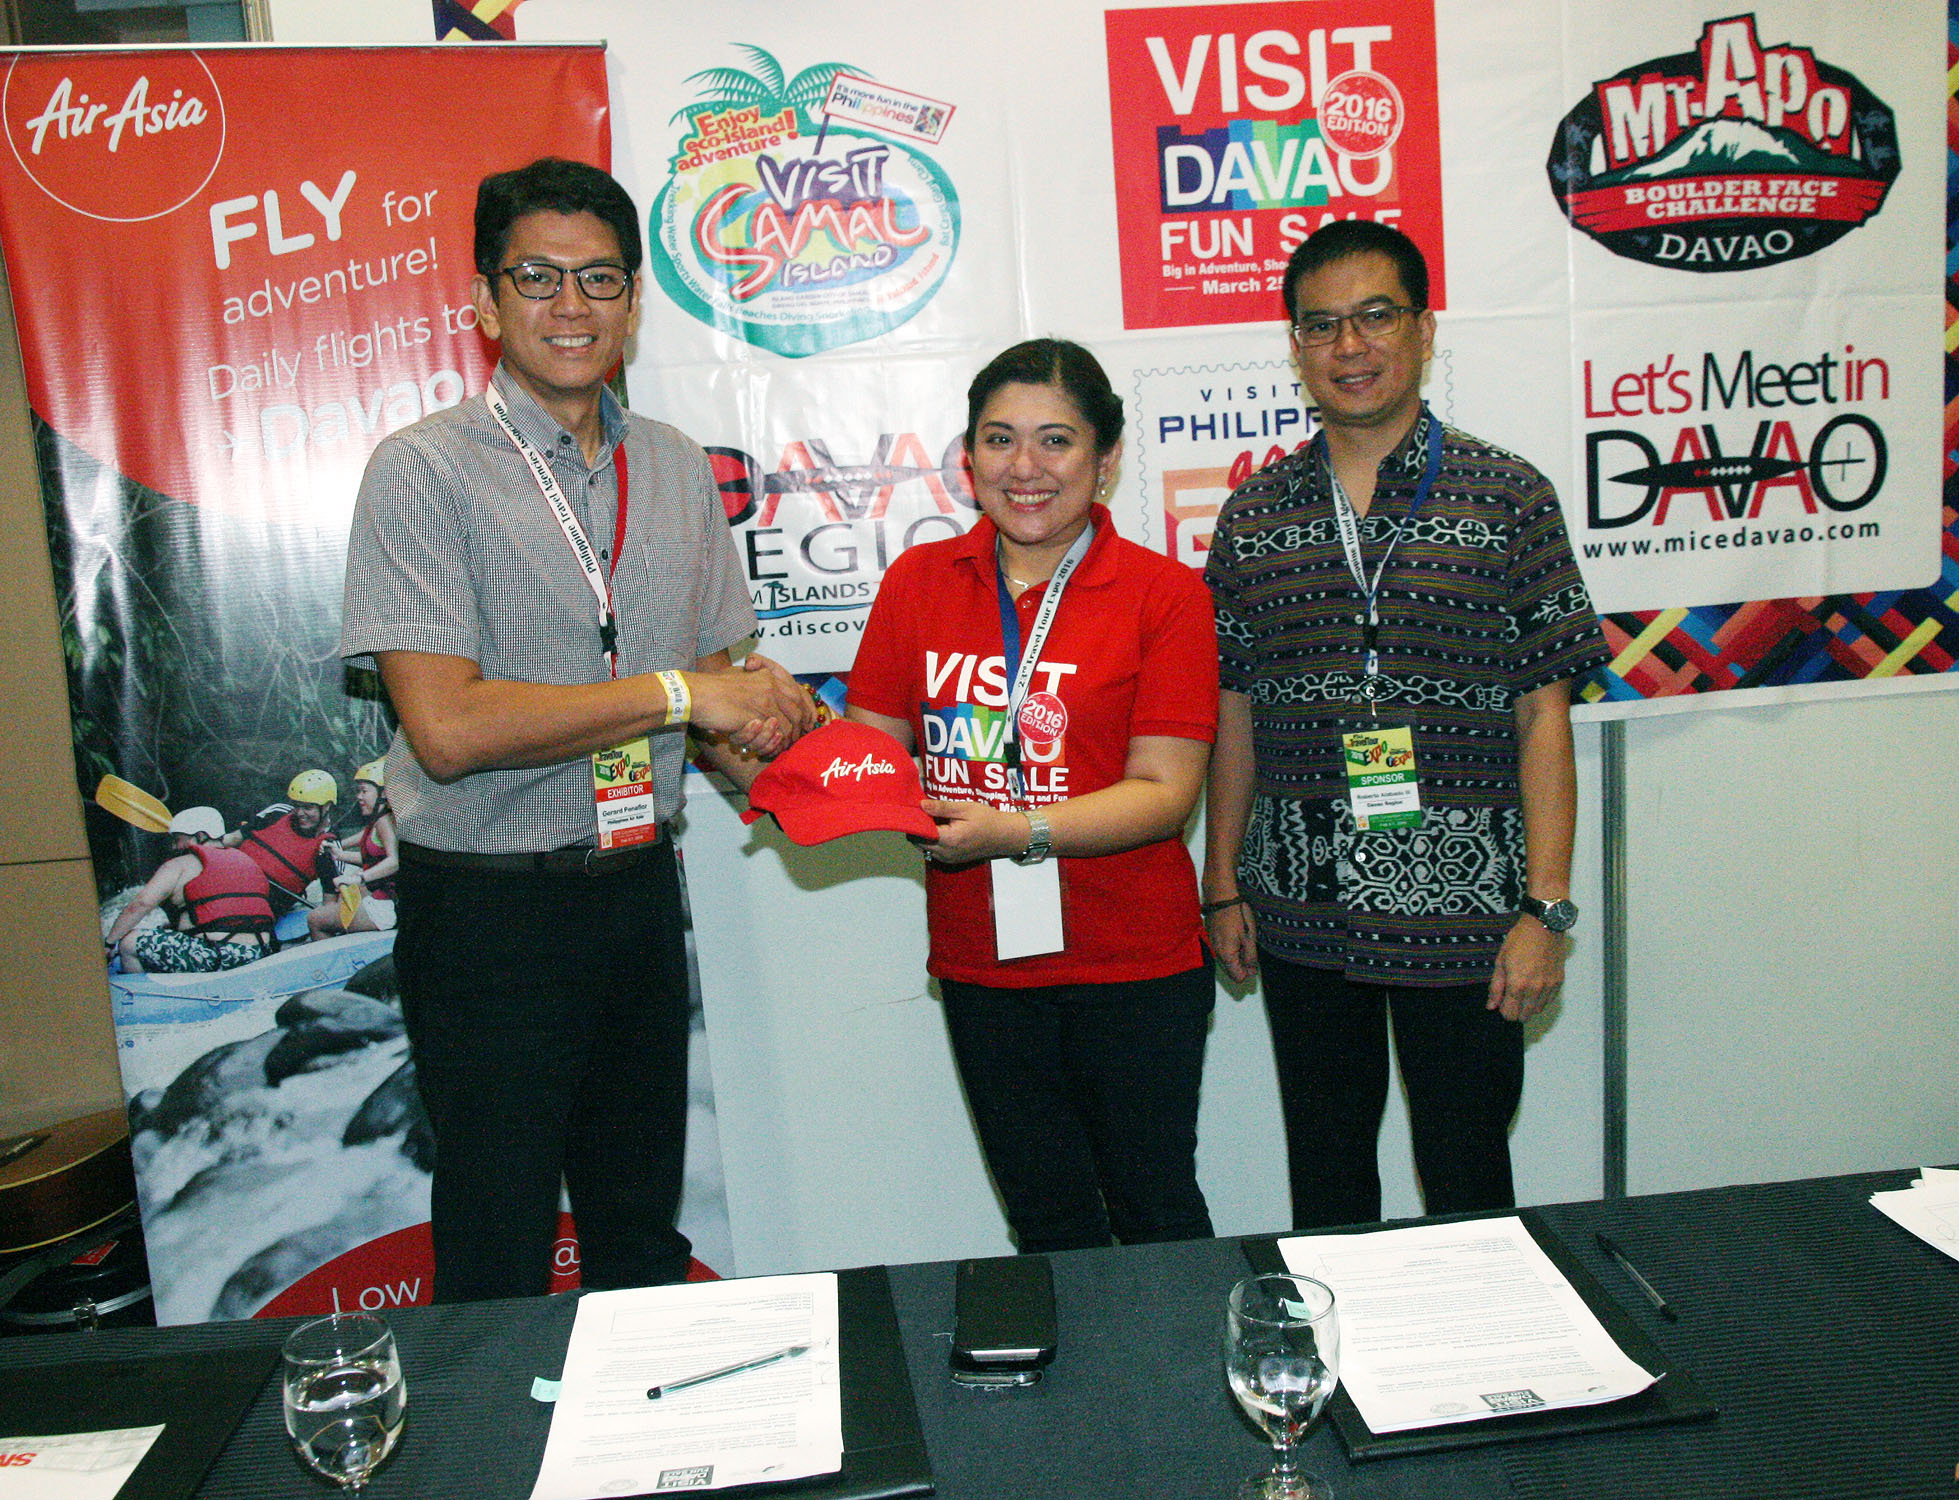 AirAsia, Davao tourism partner for Visit Davao Fun Sale 2016